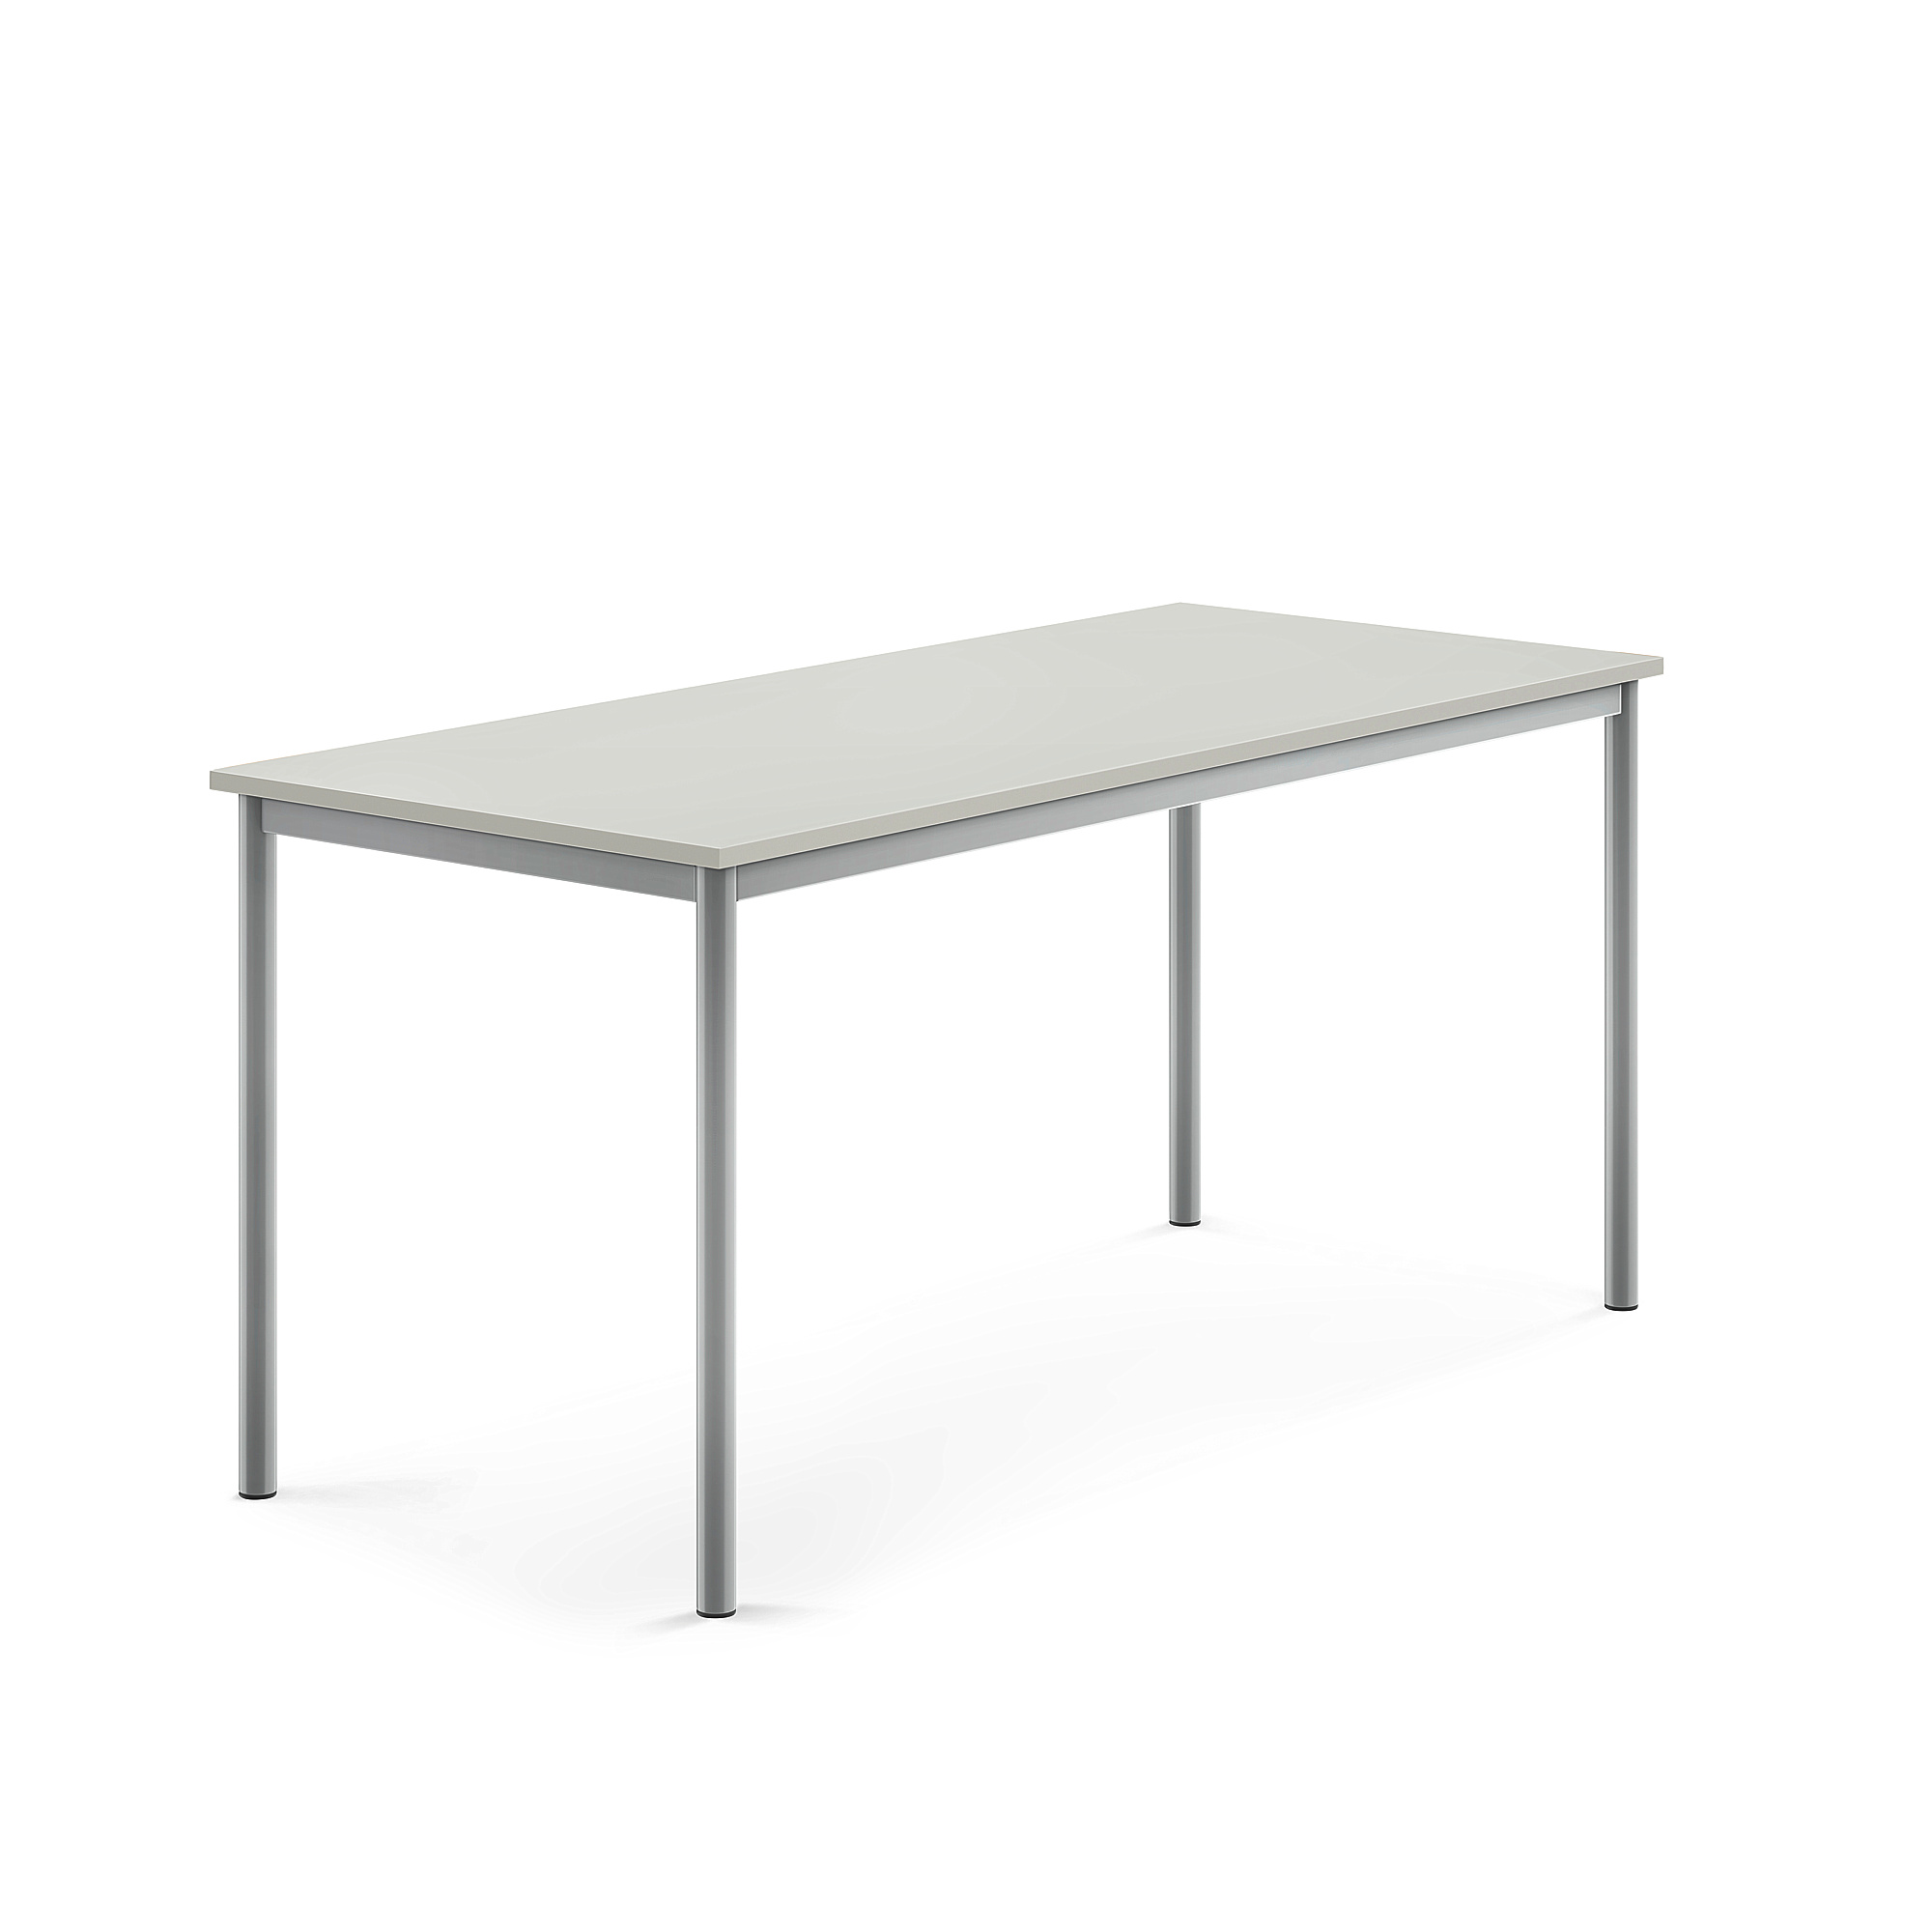 Stůl BORÅS, 1600x700x720 mm, stříbrné nohy, HPL deska, šedá